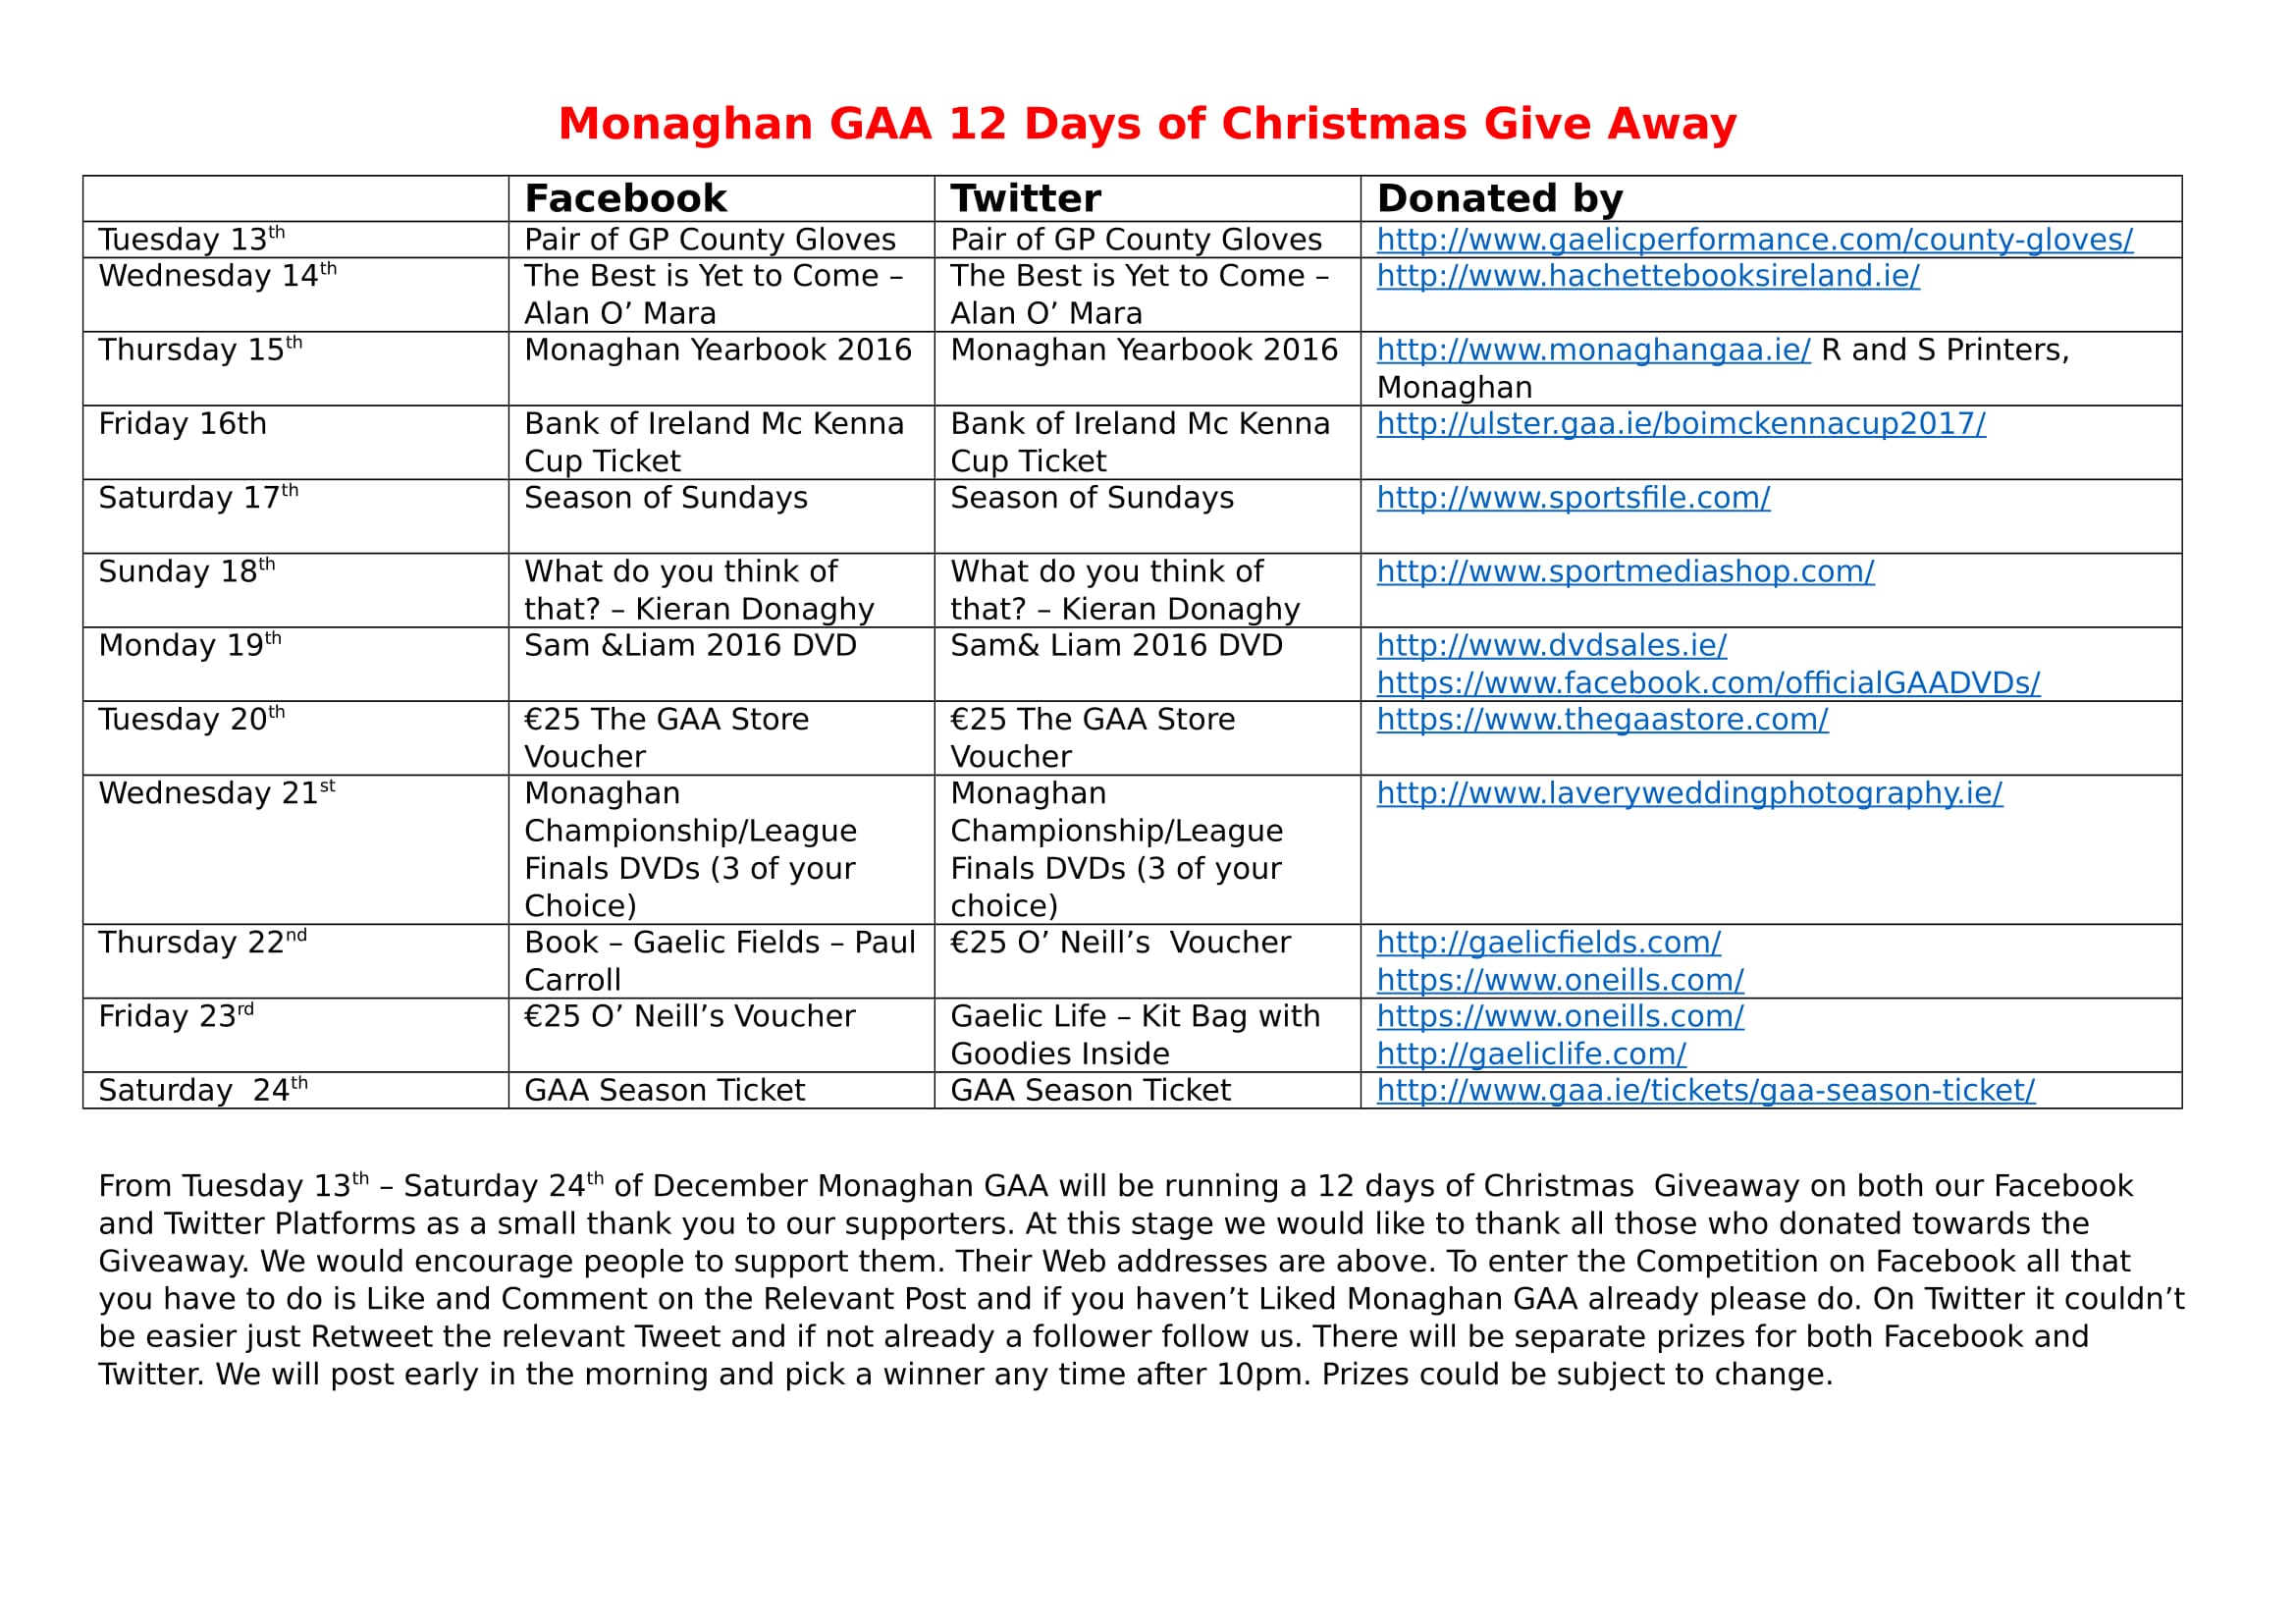 Monaghan GAA 12 Days of Christmas Giveaway